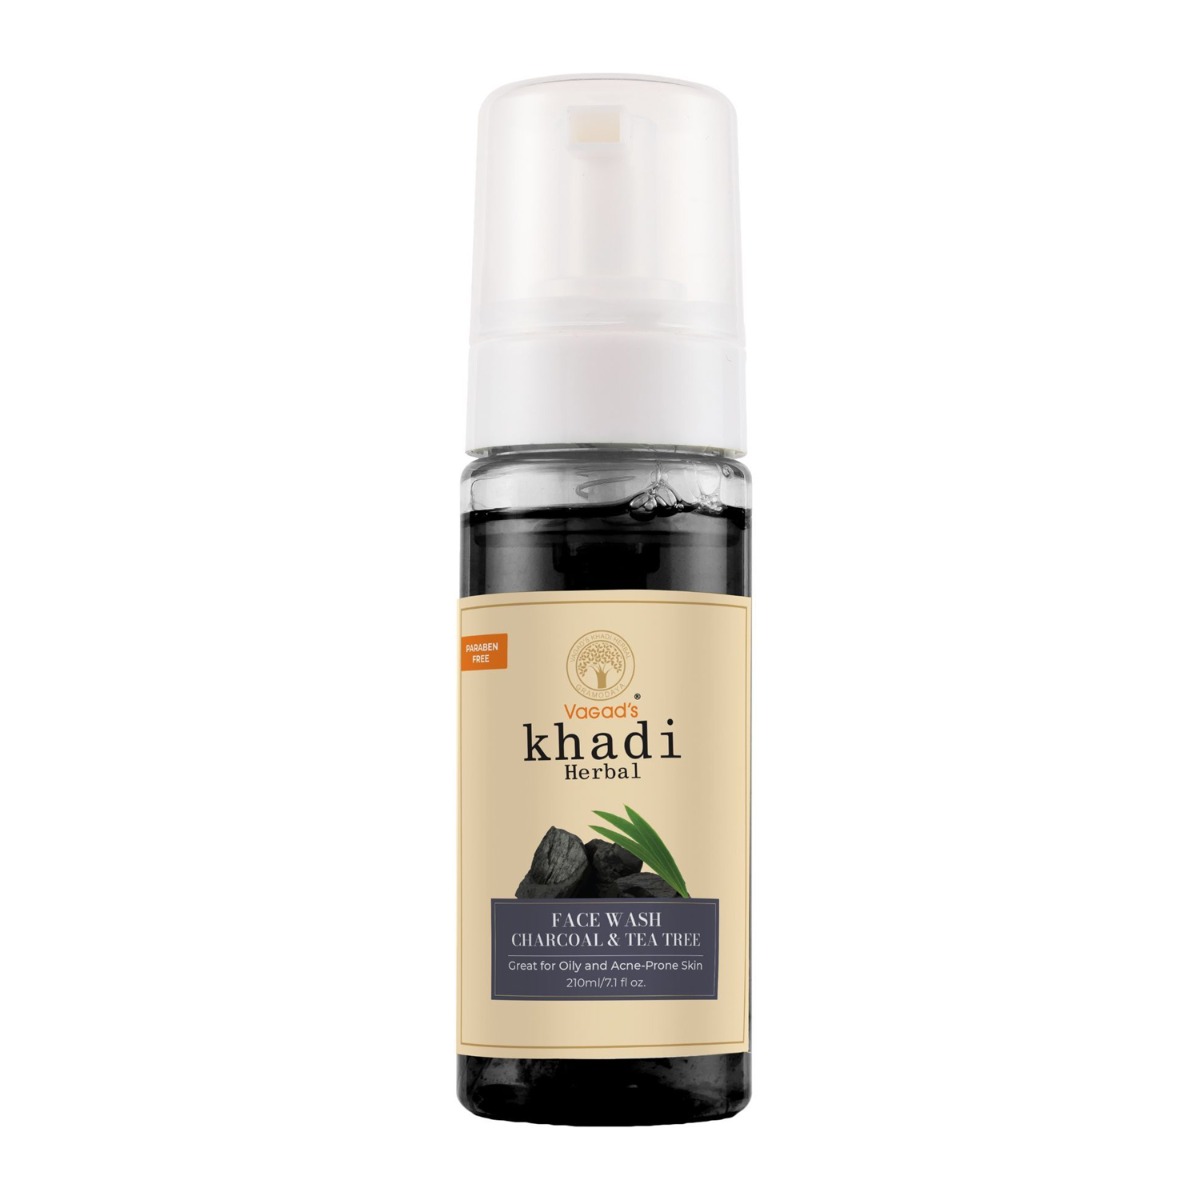 Vagad's Khadi Charcoal & Tea Tree Foaming Face Wash, 150ml